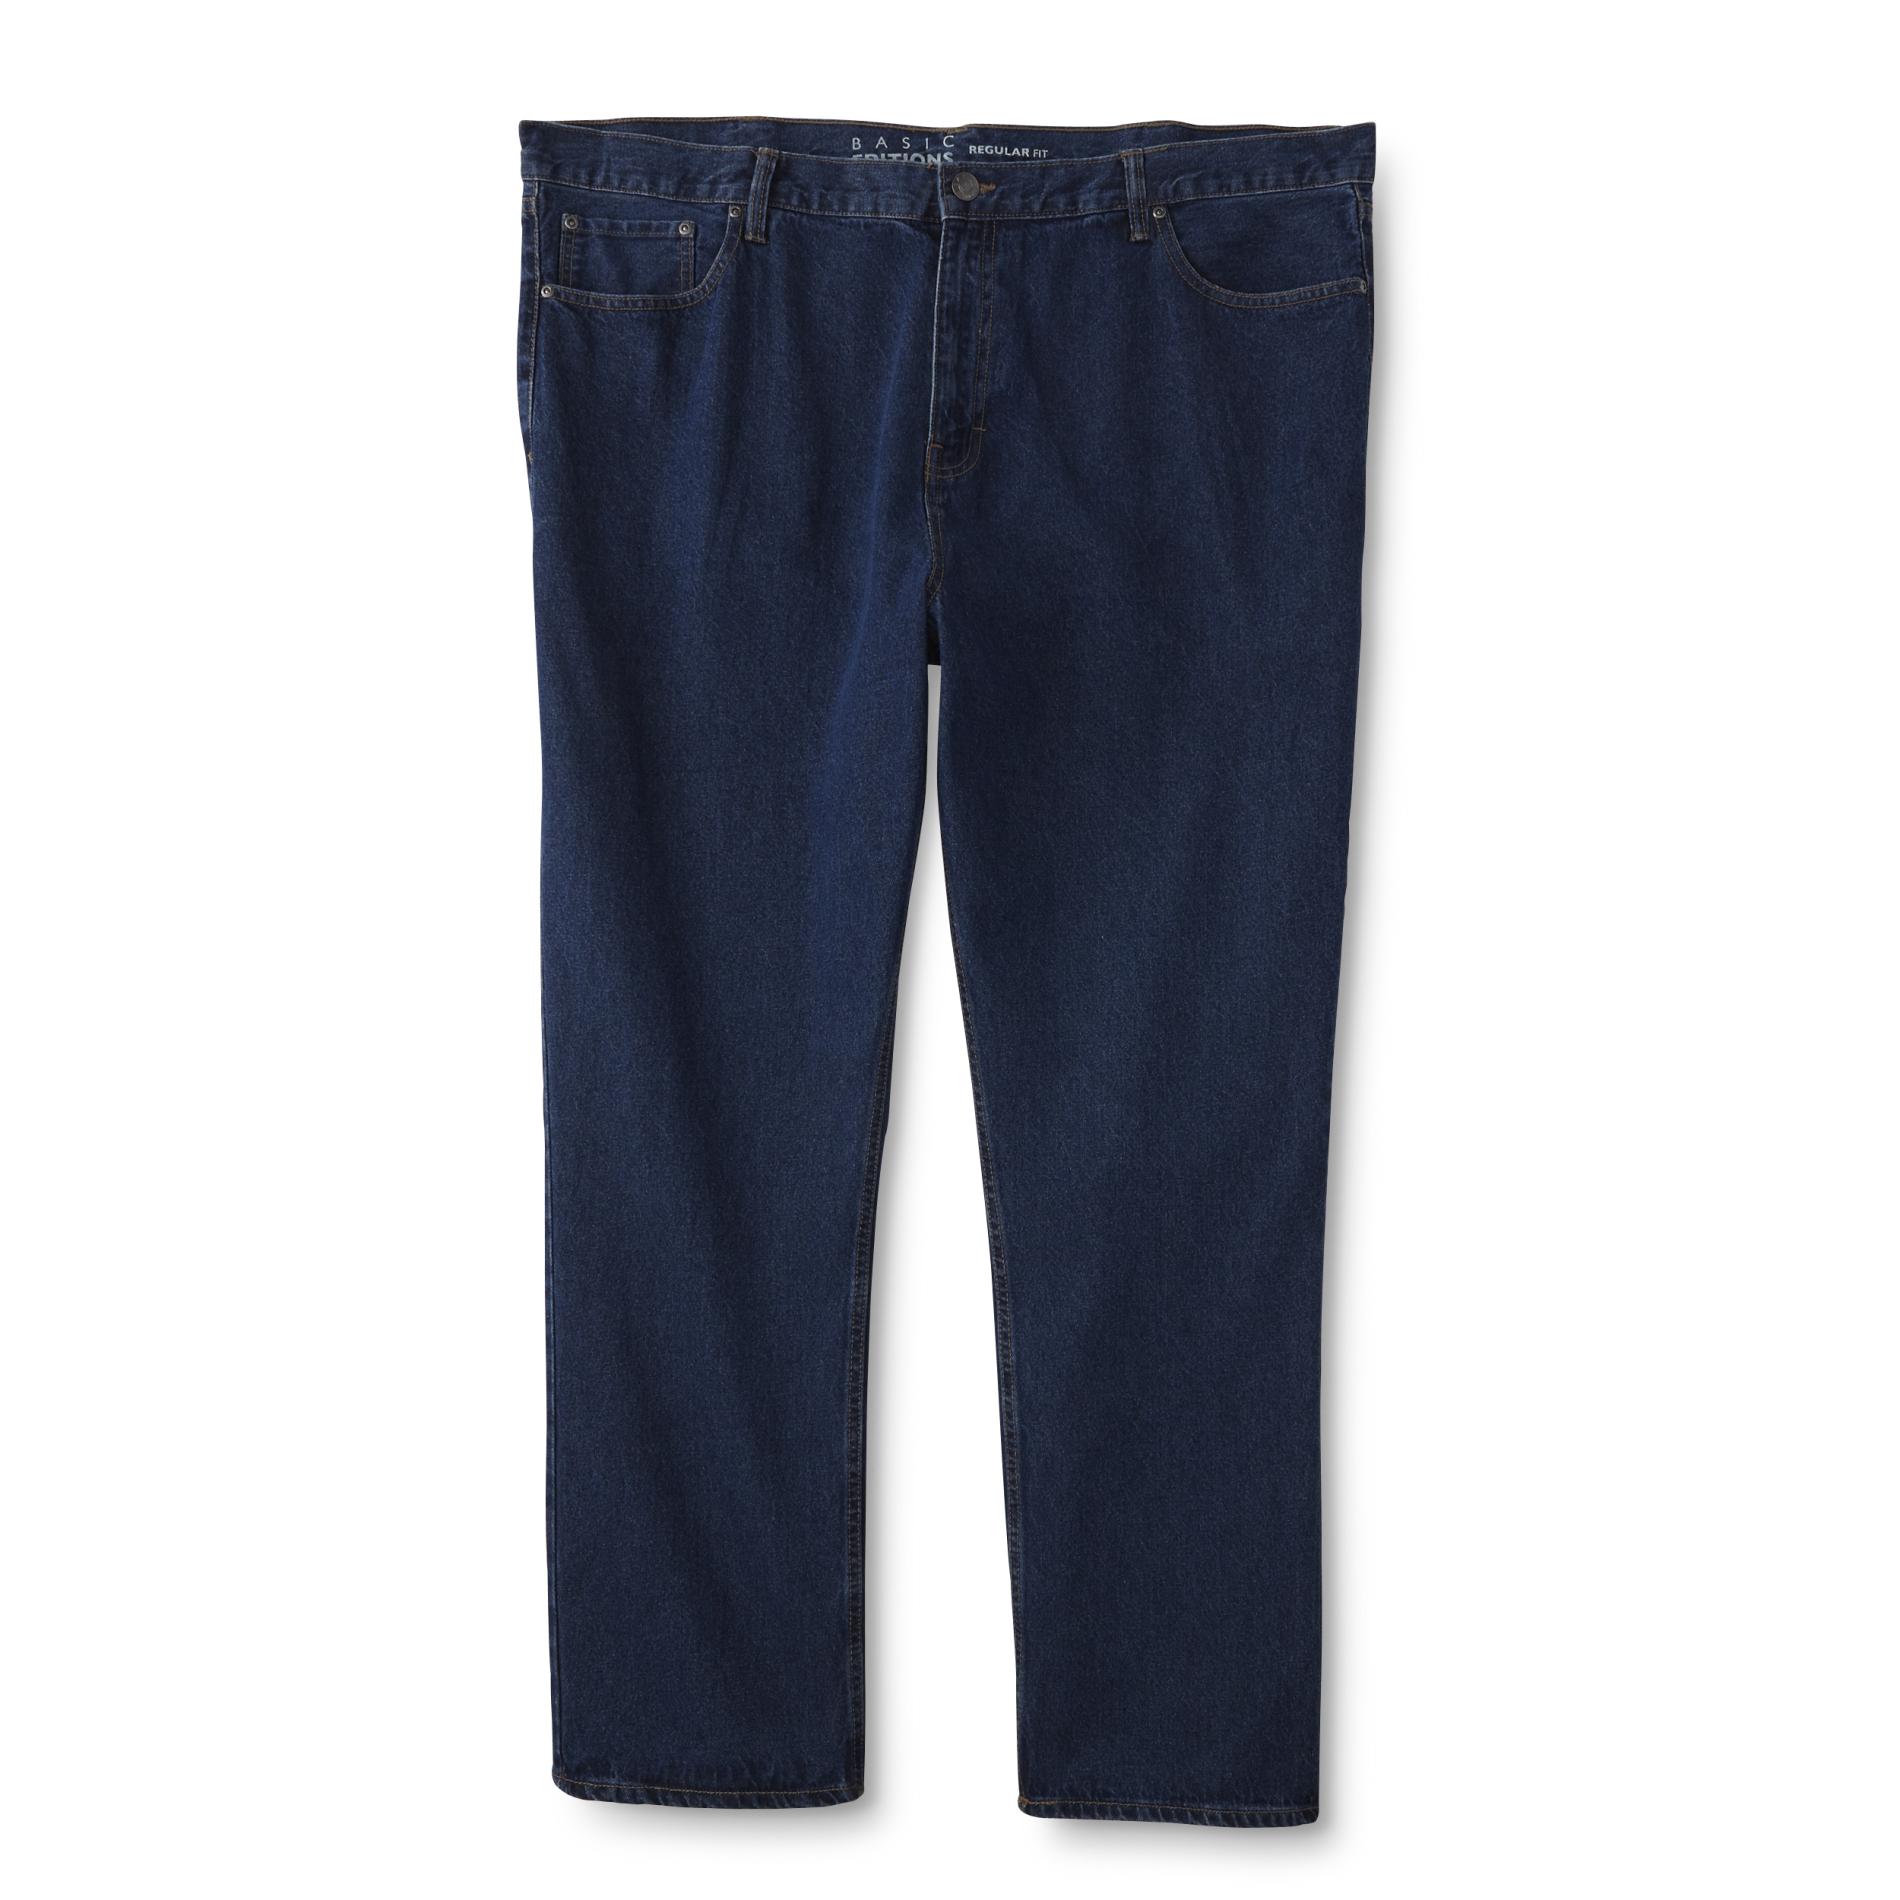 basic edition blue jeans